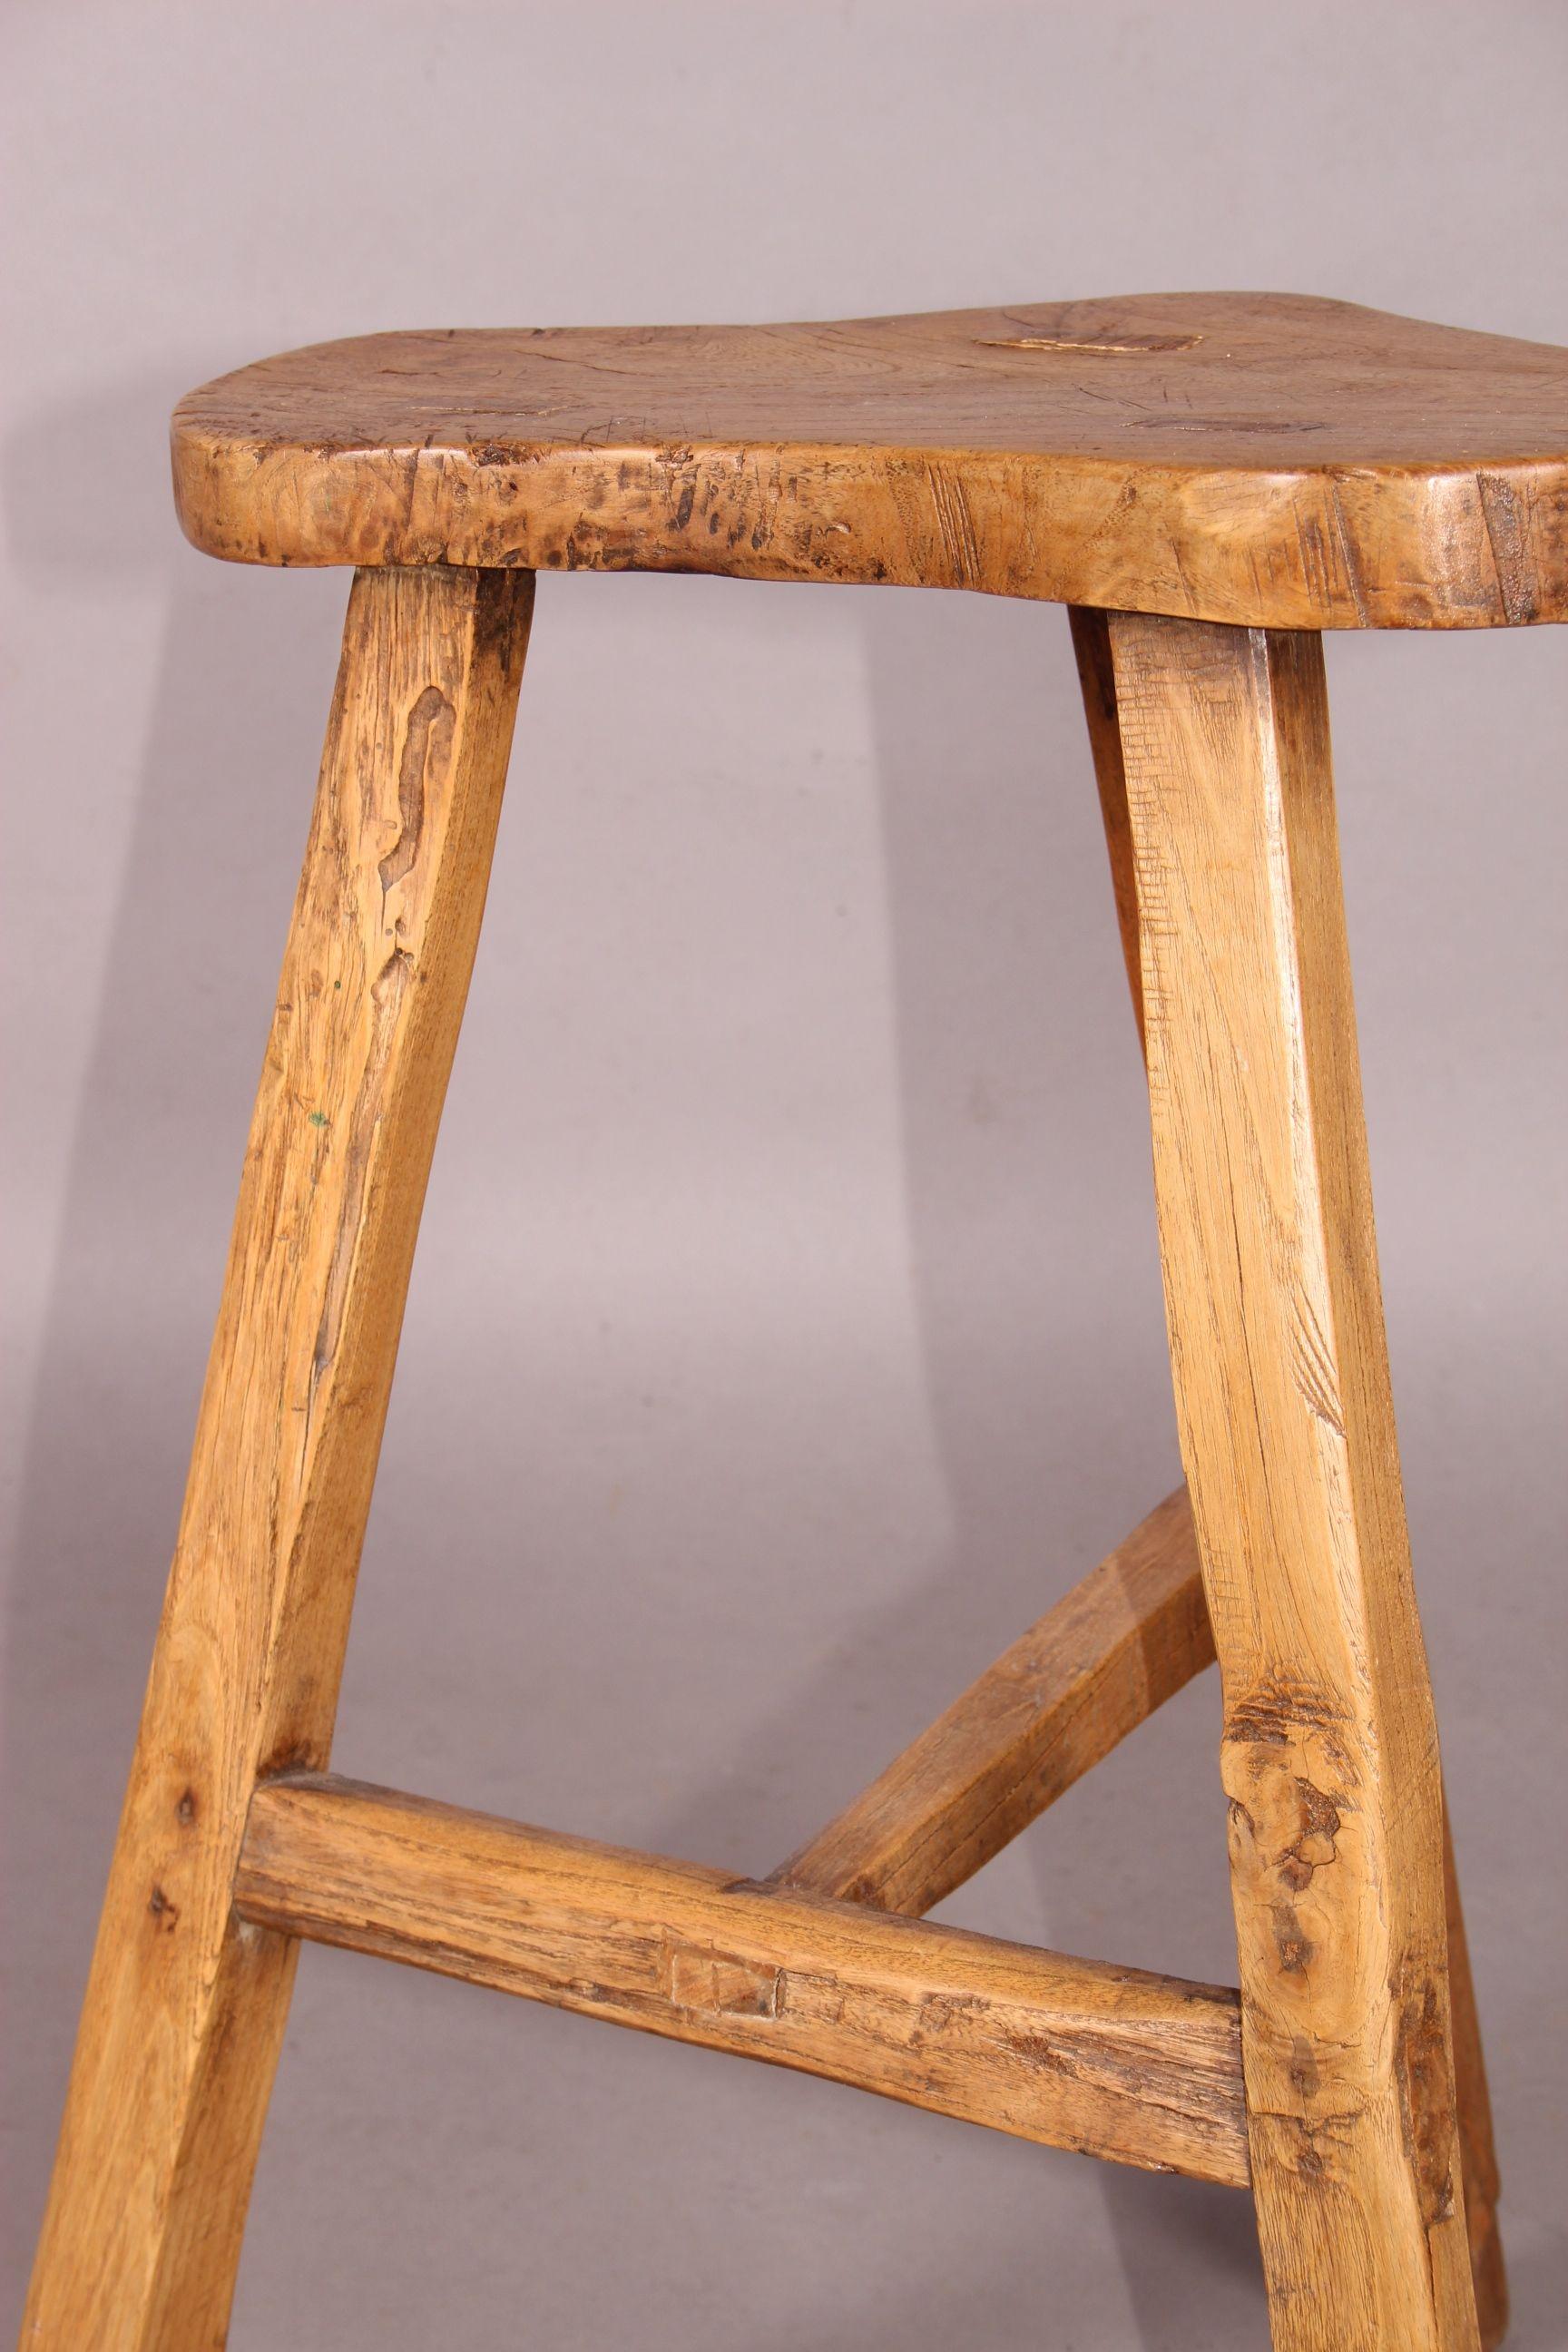 Organic wood stool.